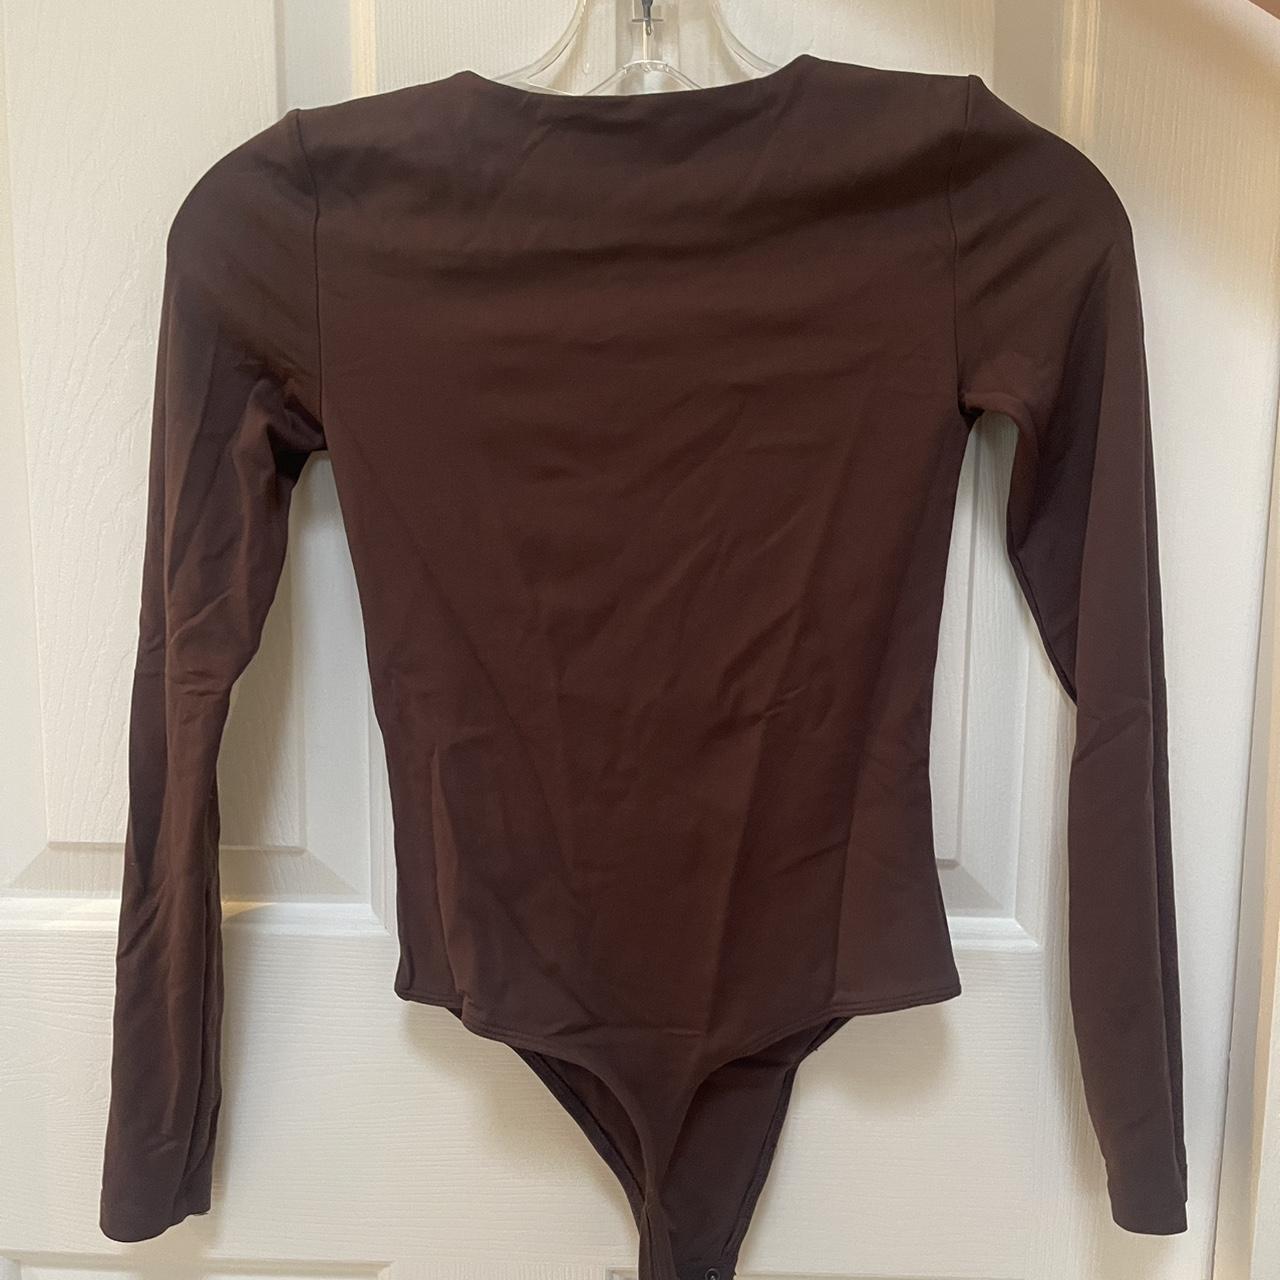 Aritzia babaton contour cami bodysuit in deep taupe - Depop